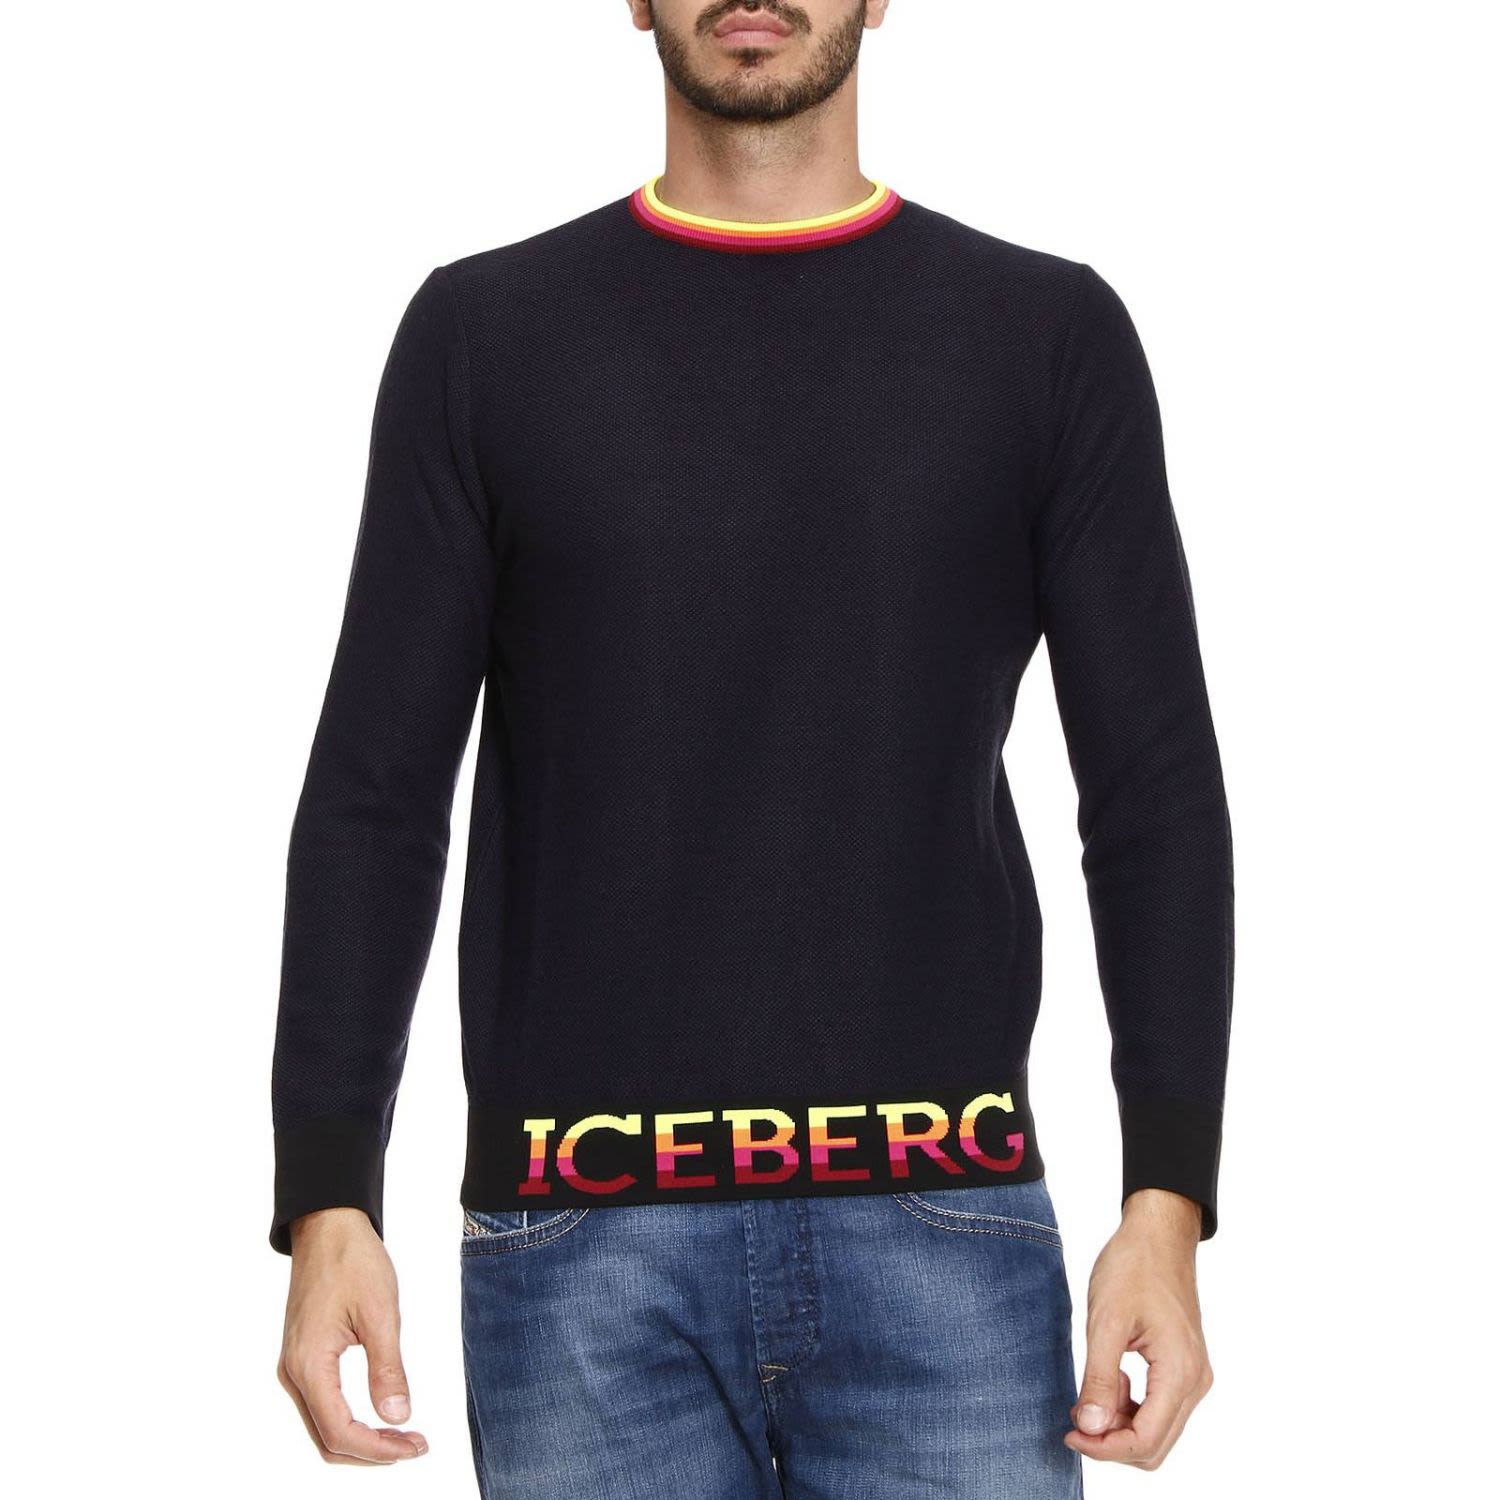 iceberg sweater ravelry